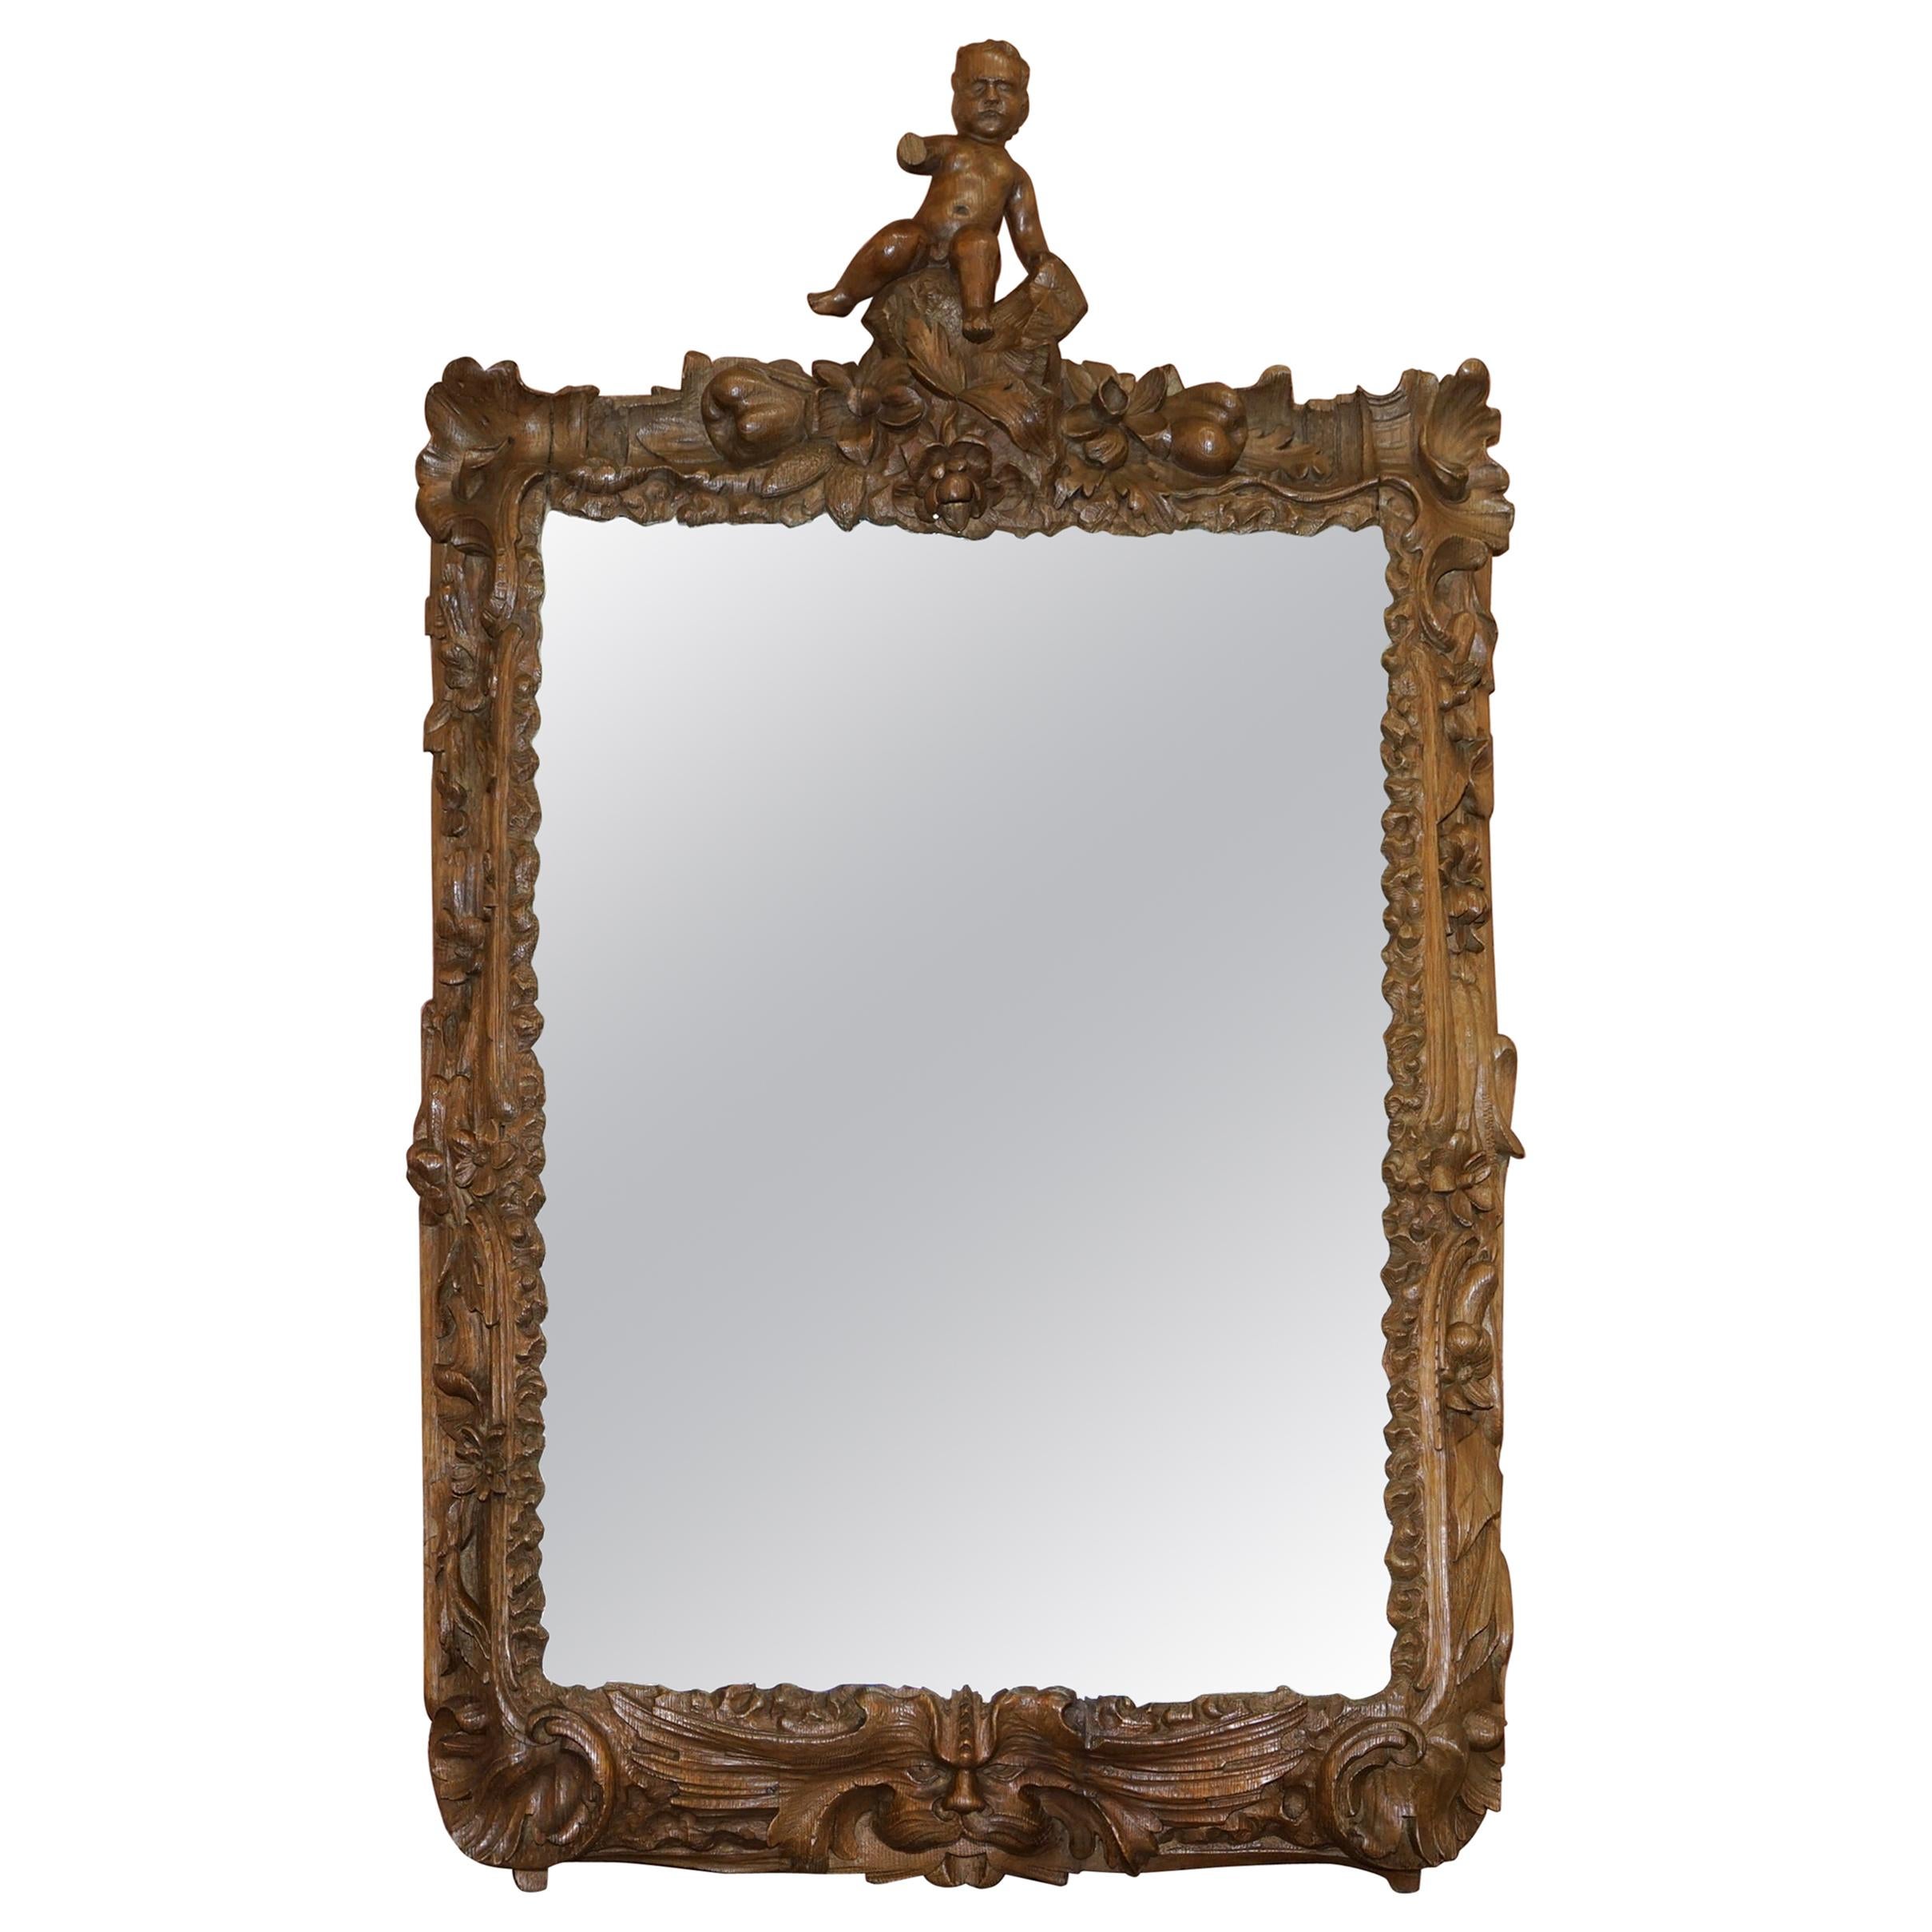 Rare Original 18th Century Ornately Carved Frame Wall Mirror with Cherub Boy For Sale